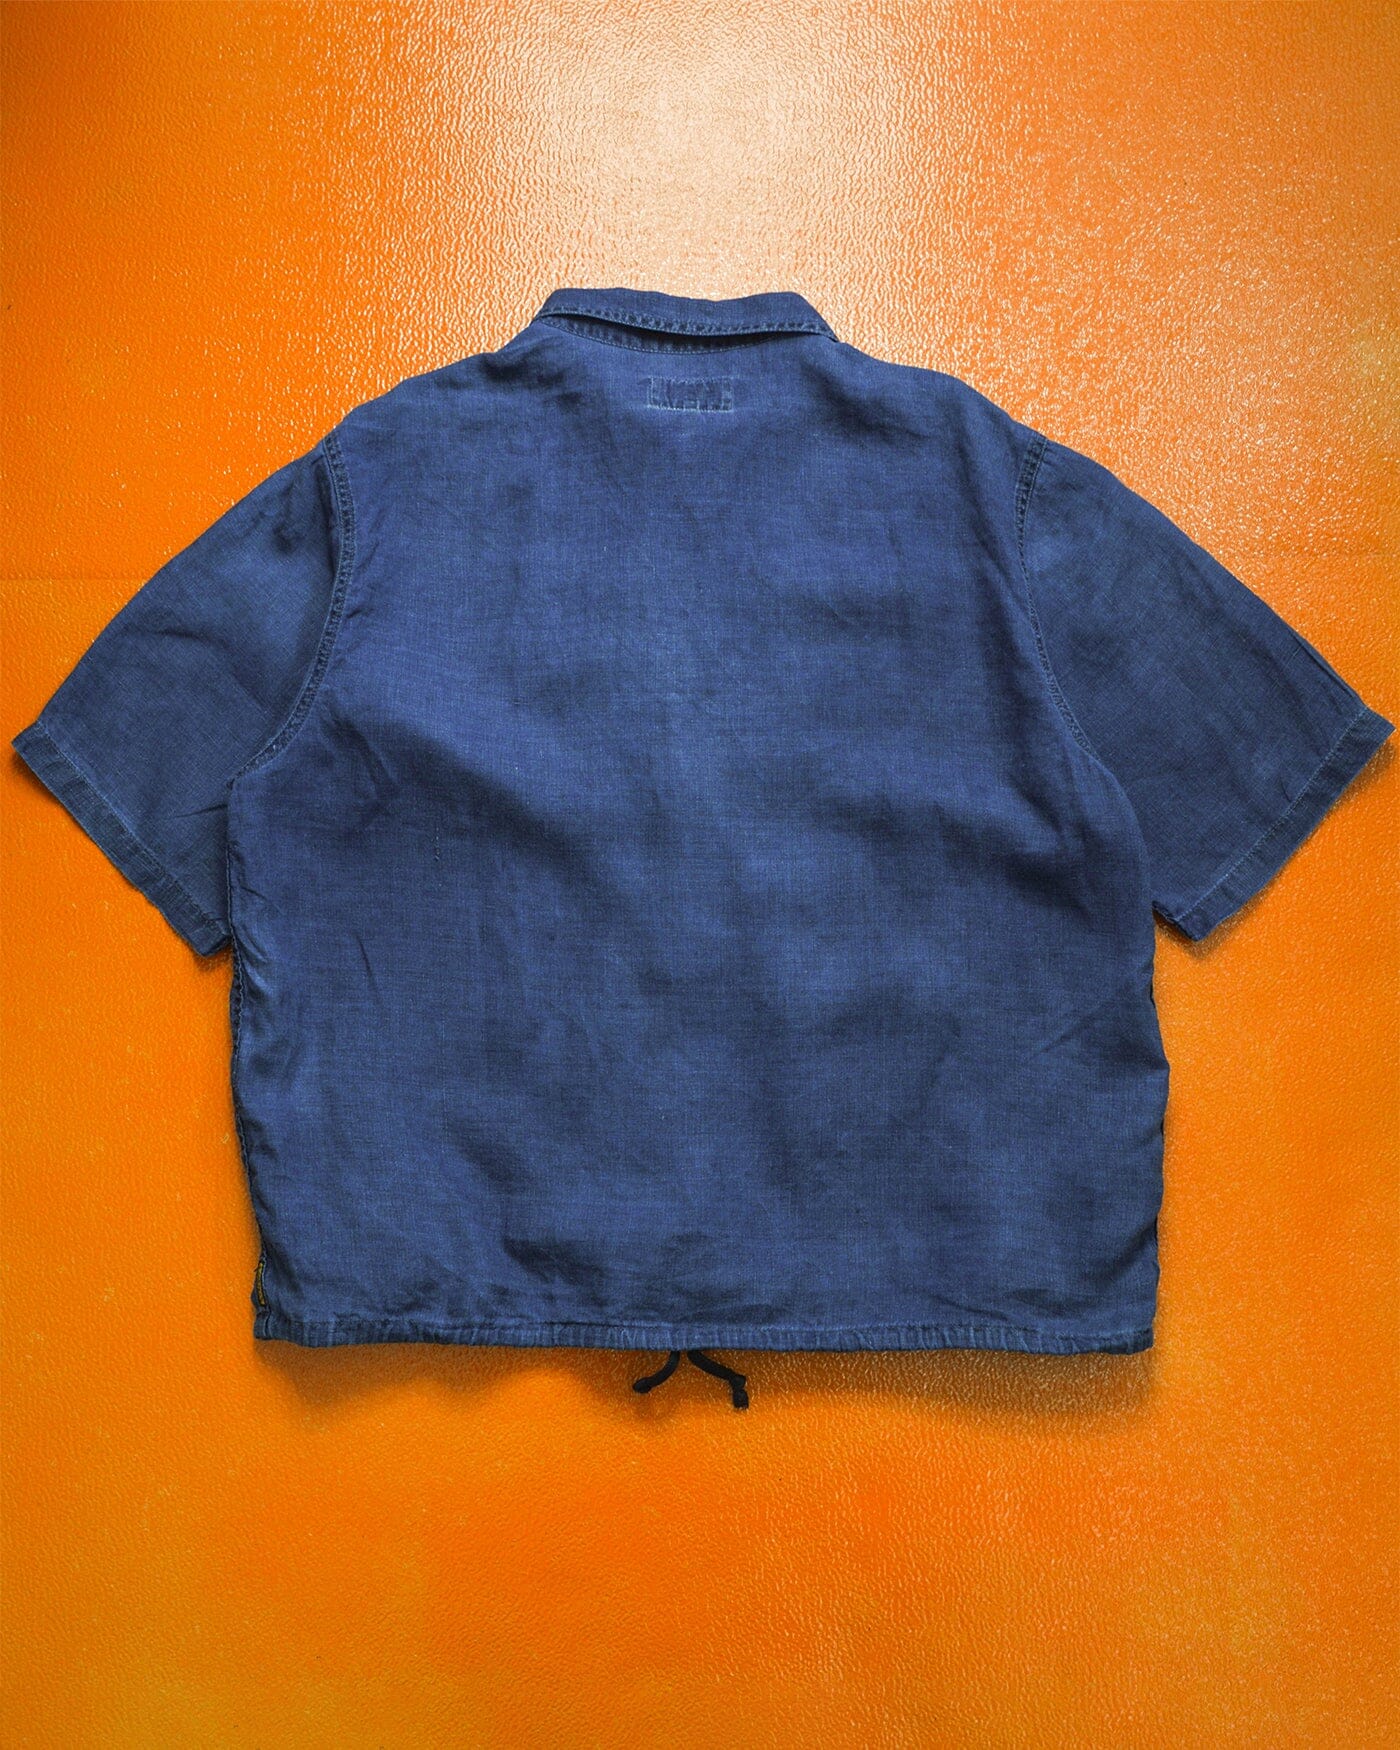 Armani Lino Flax / Linen "Low Environmental Impact" Navy Zip Up Over Shirt (L~XL)